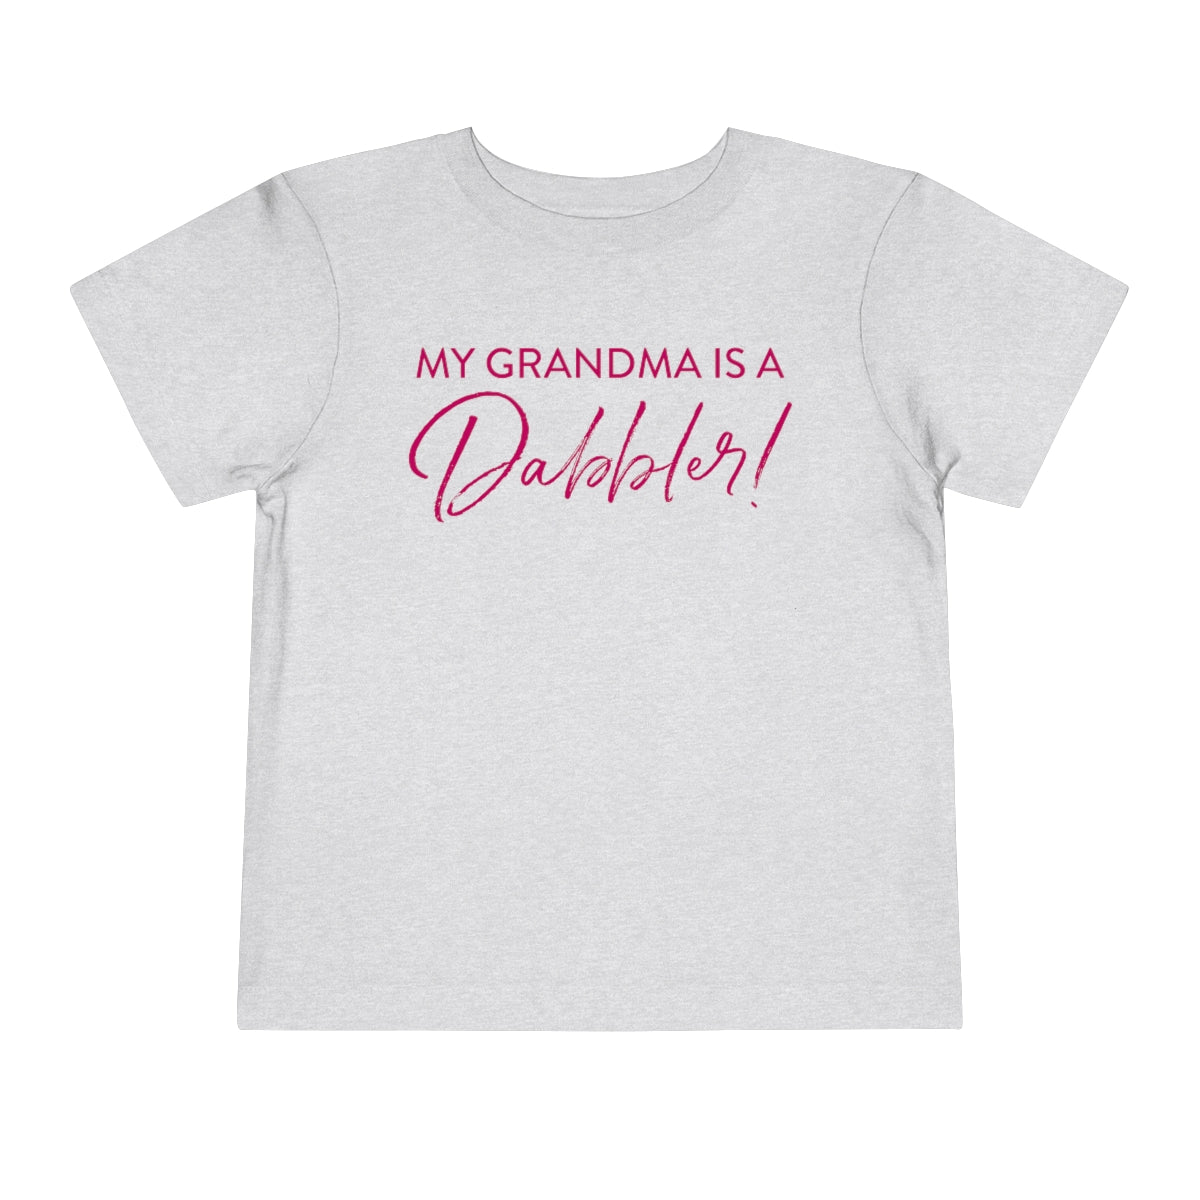 My Grandma is a Dabbler! (Pink)